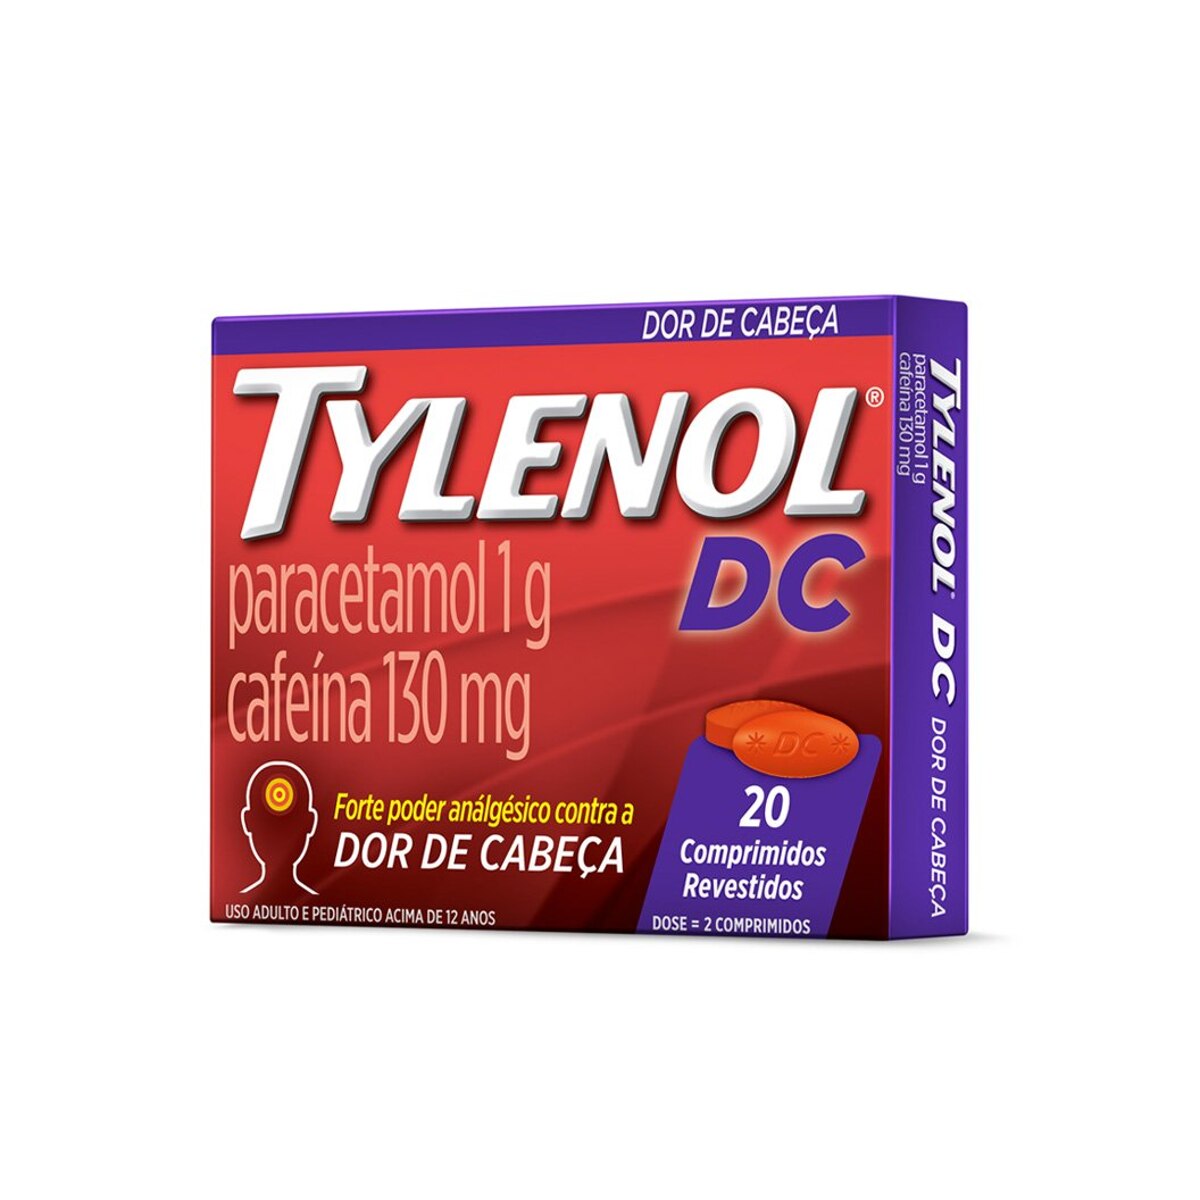 Tylenol DC 1g + 130mg 20 Comprimidos Revestidos